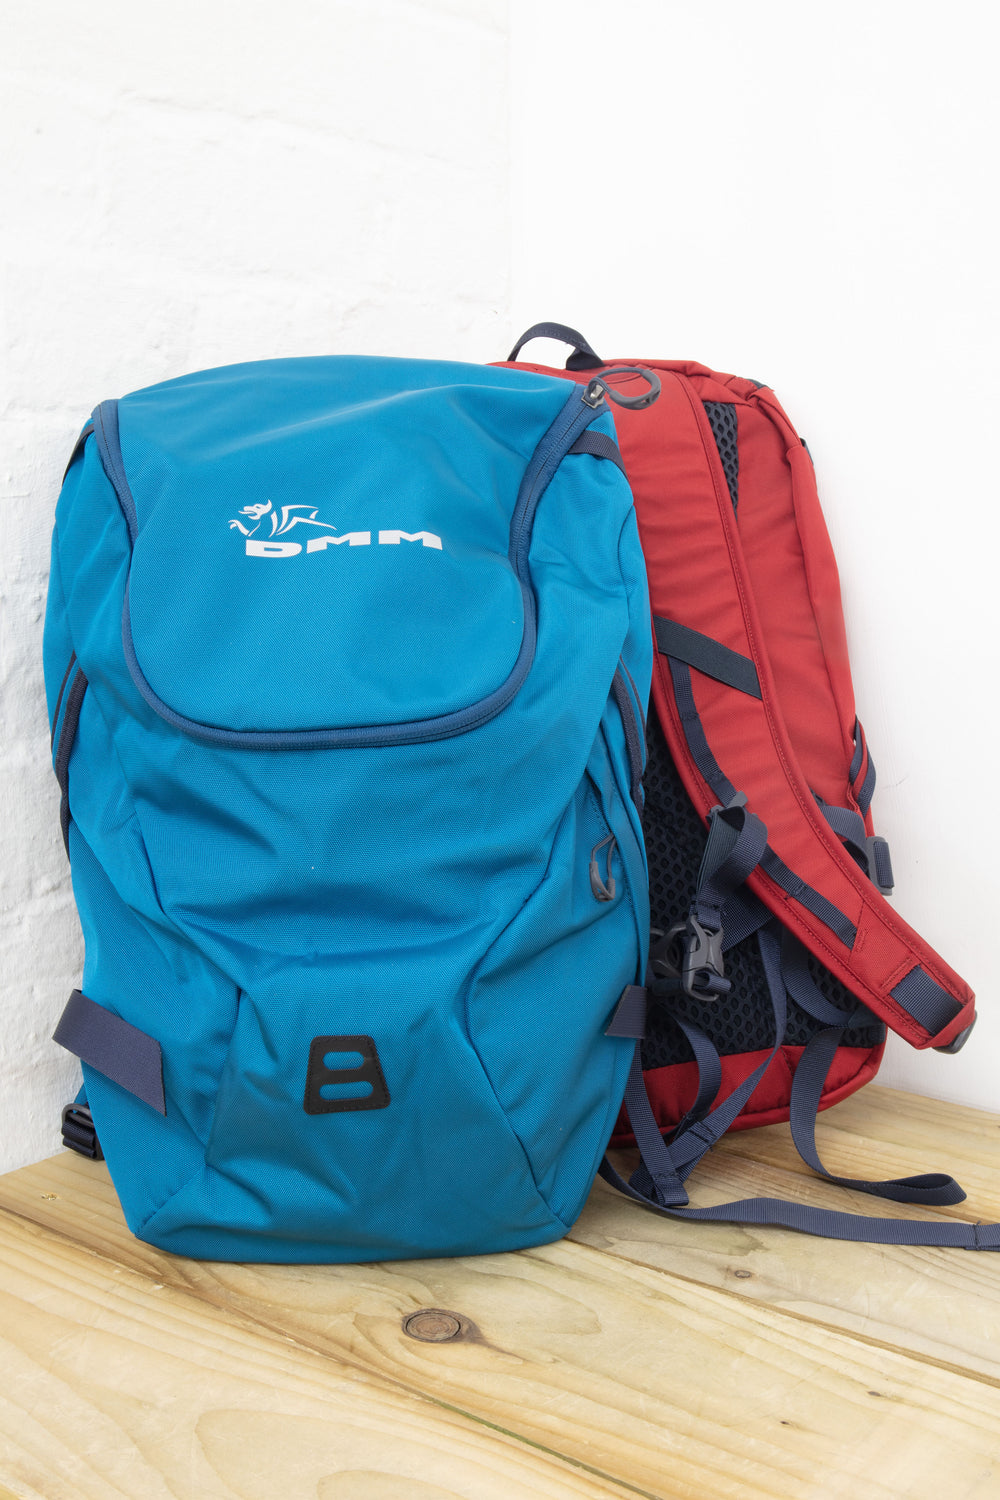 DMM - Zenith Backpack